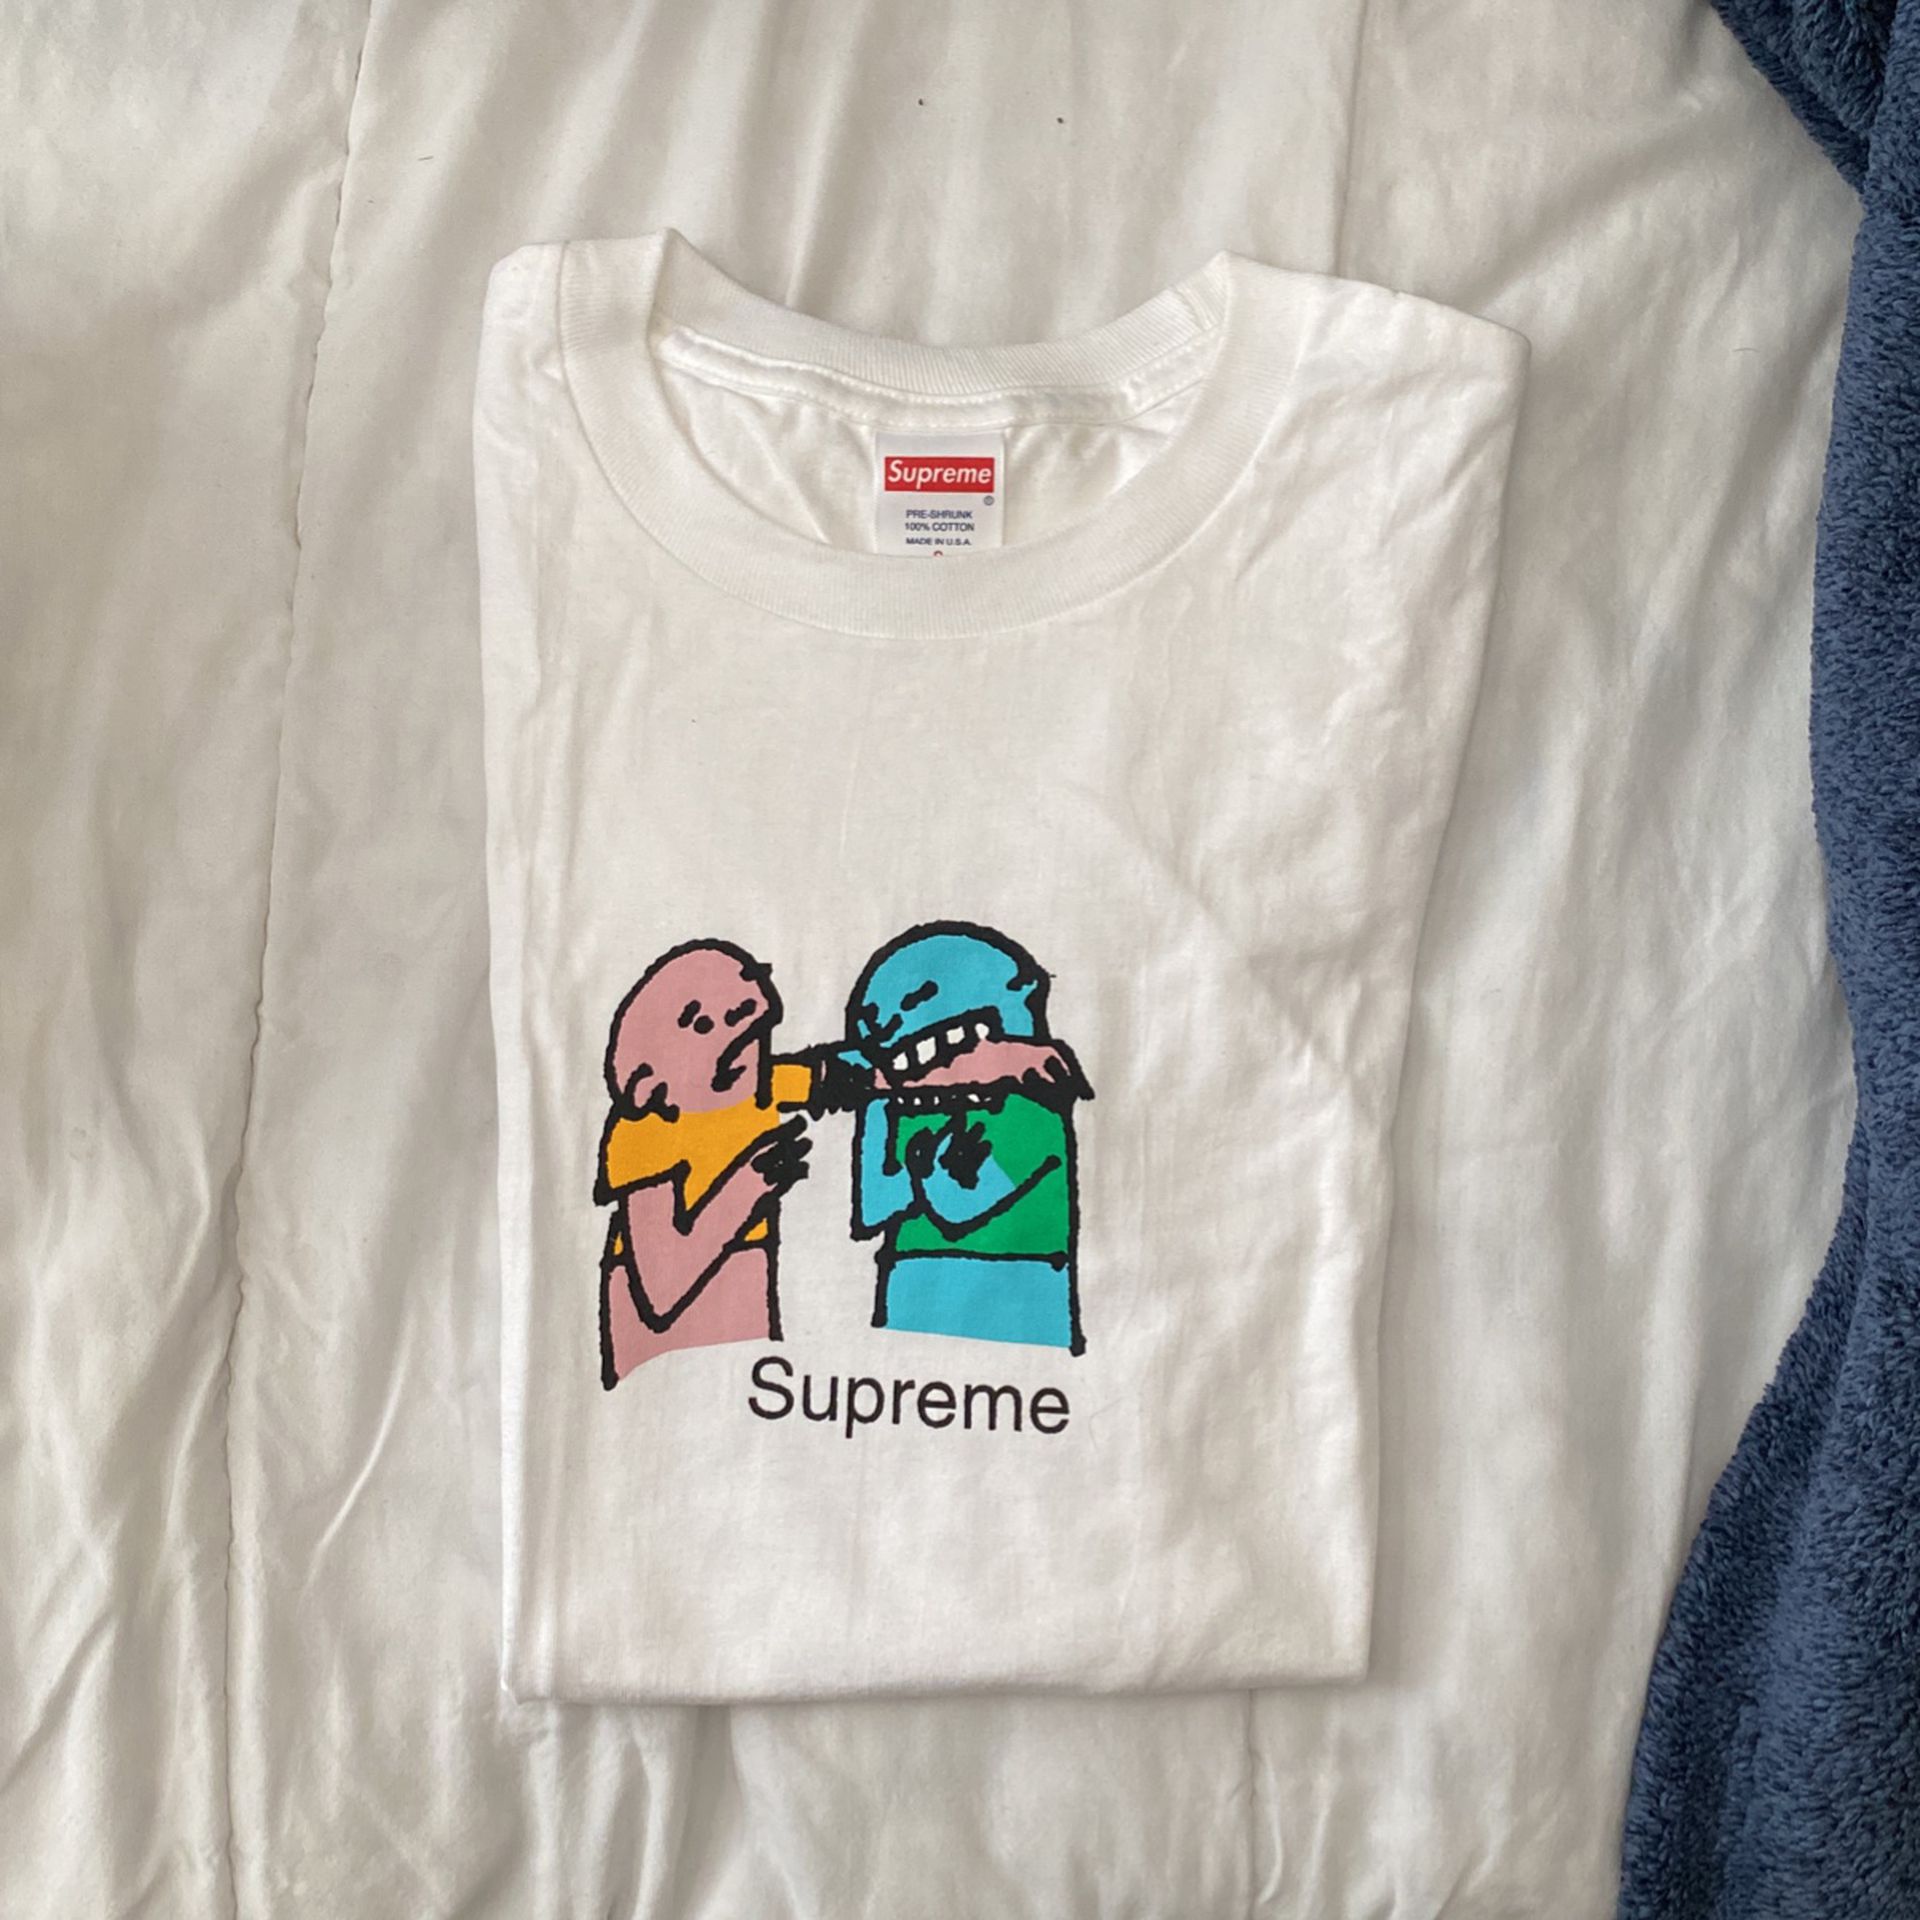 Supreme Shirt - Size Small